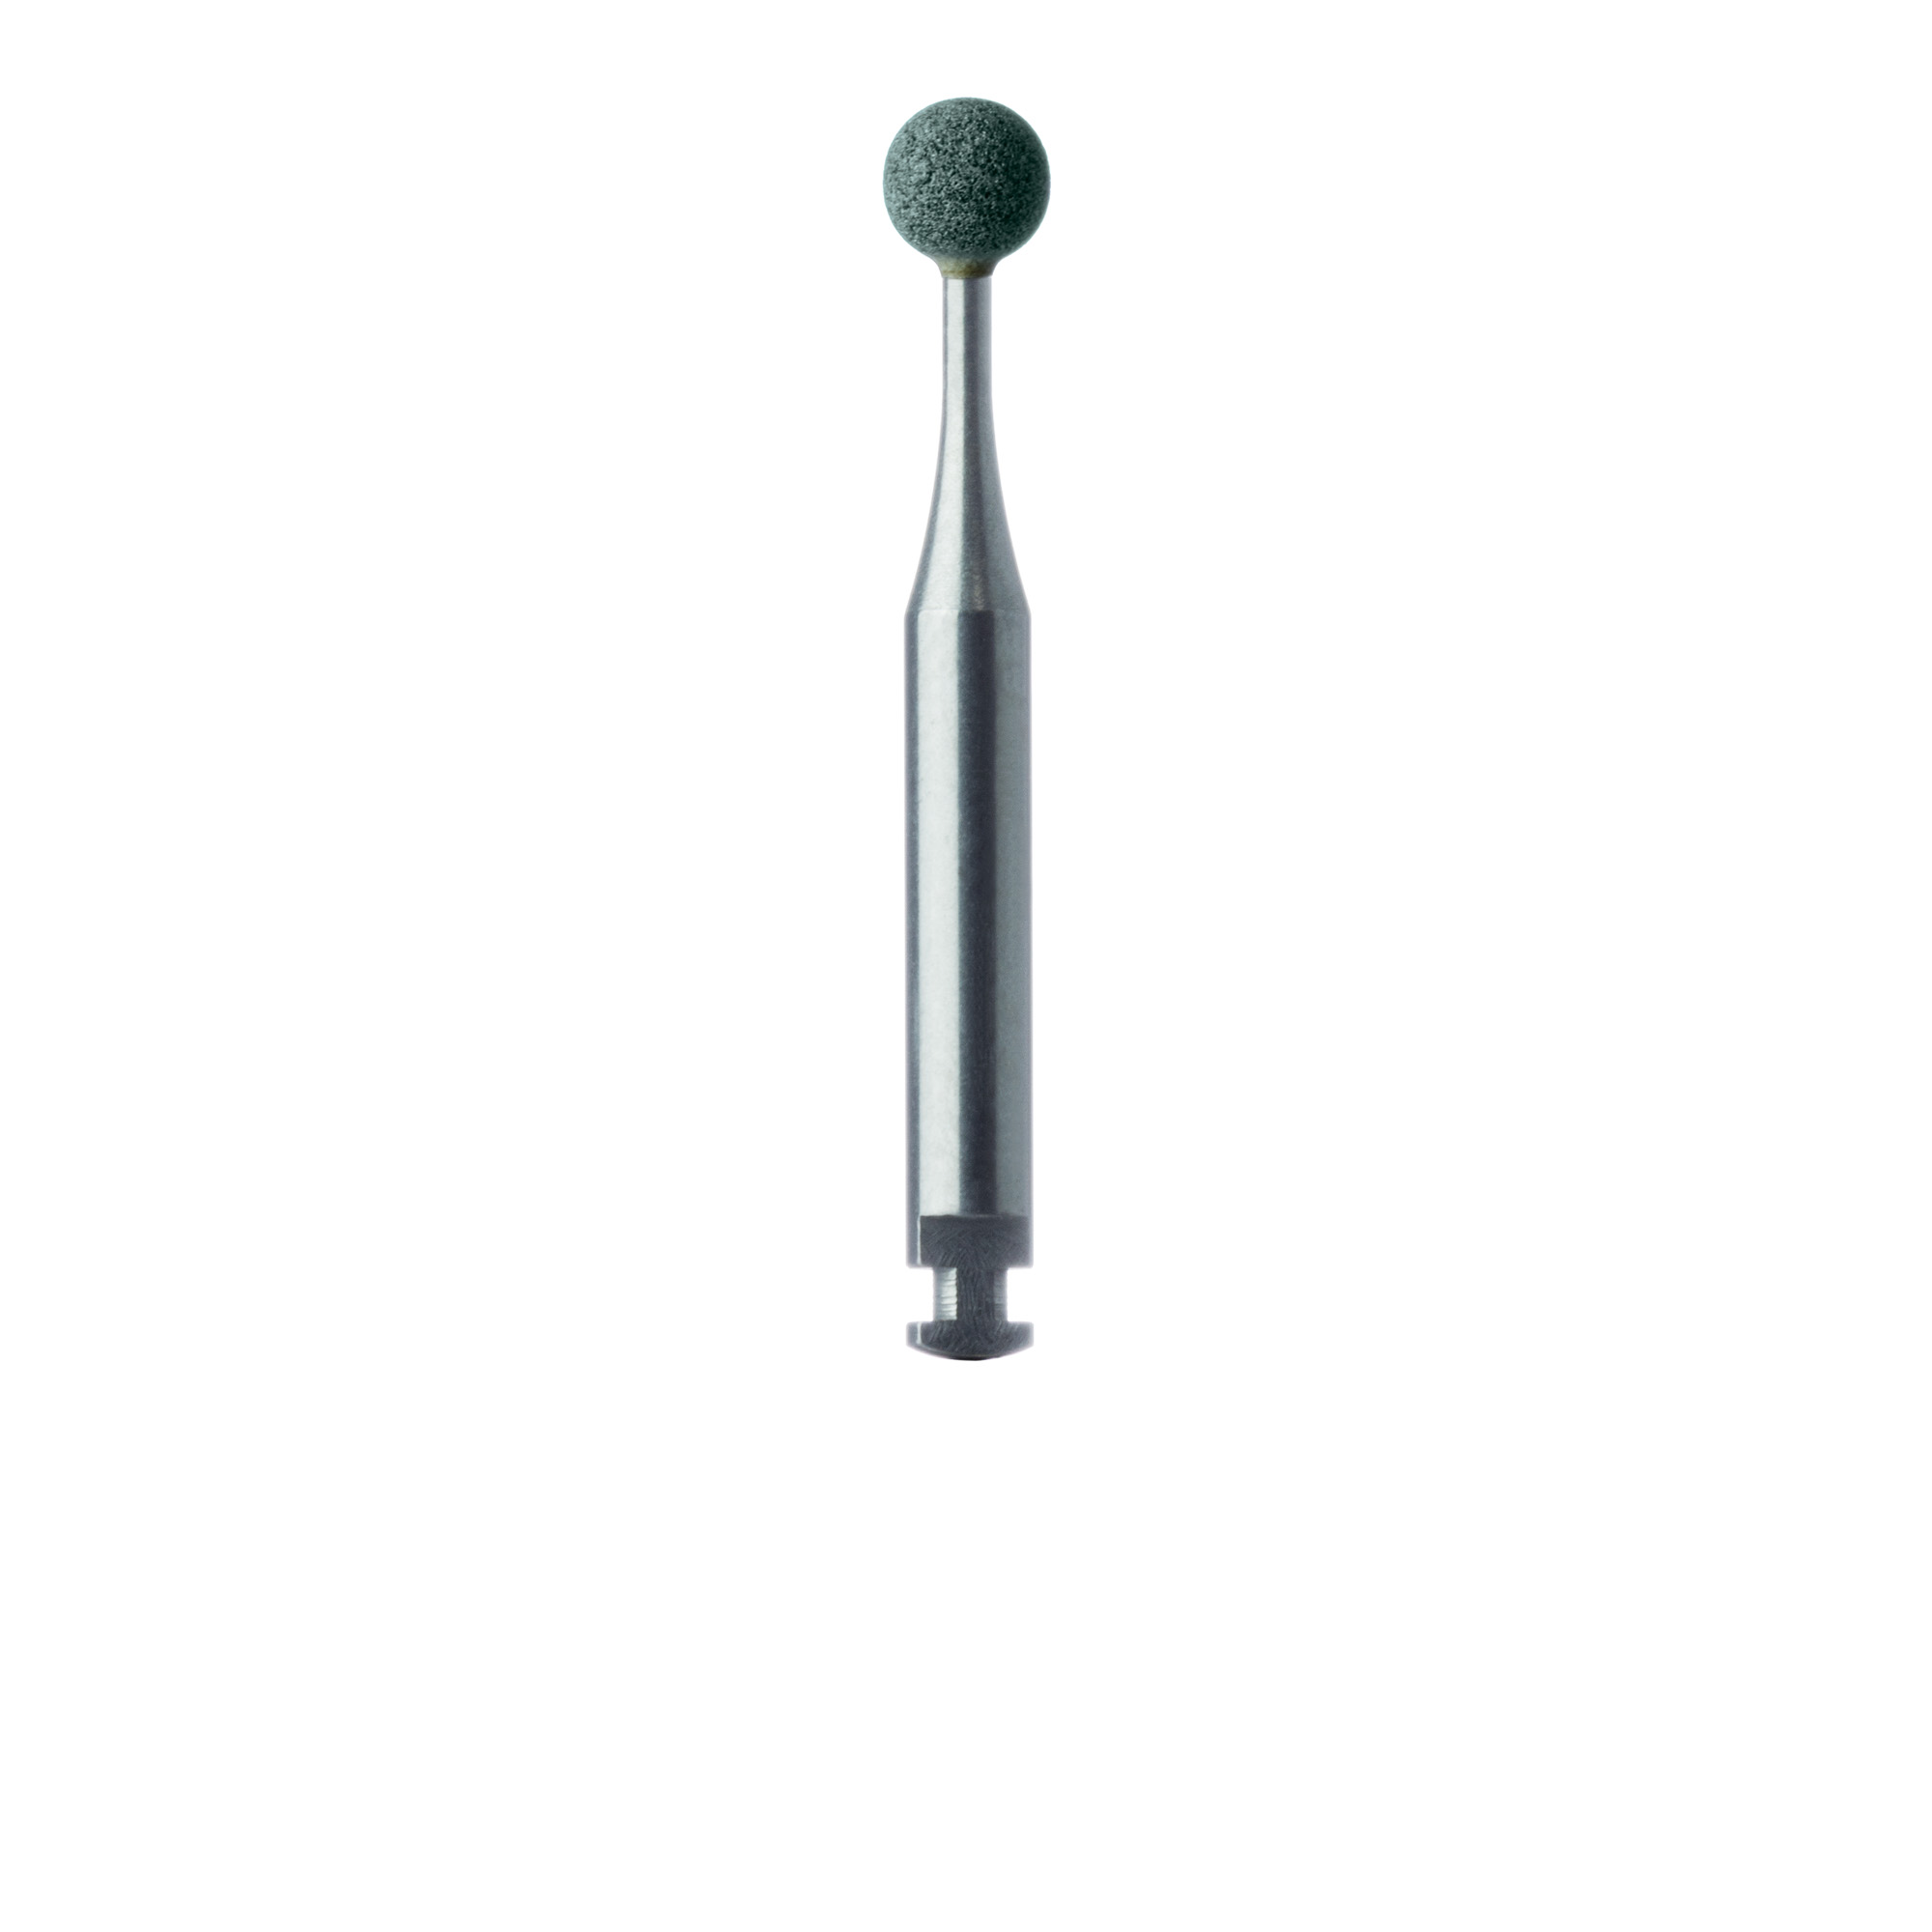 601-030-RA-GRN Abrasive, Green, Medium, 3mm Ø, RA